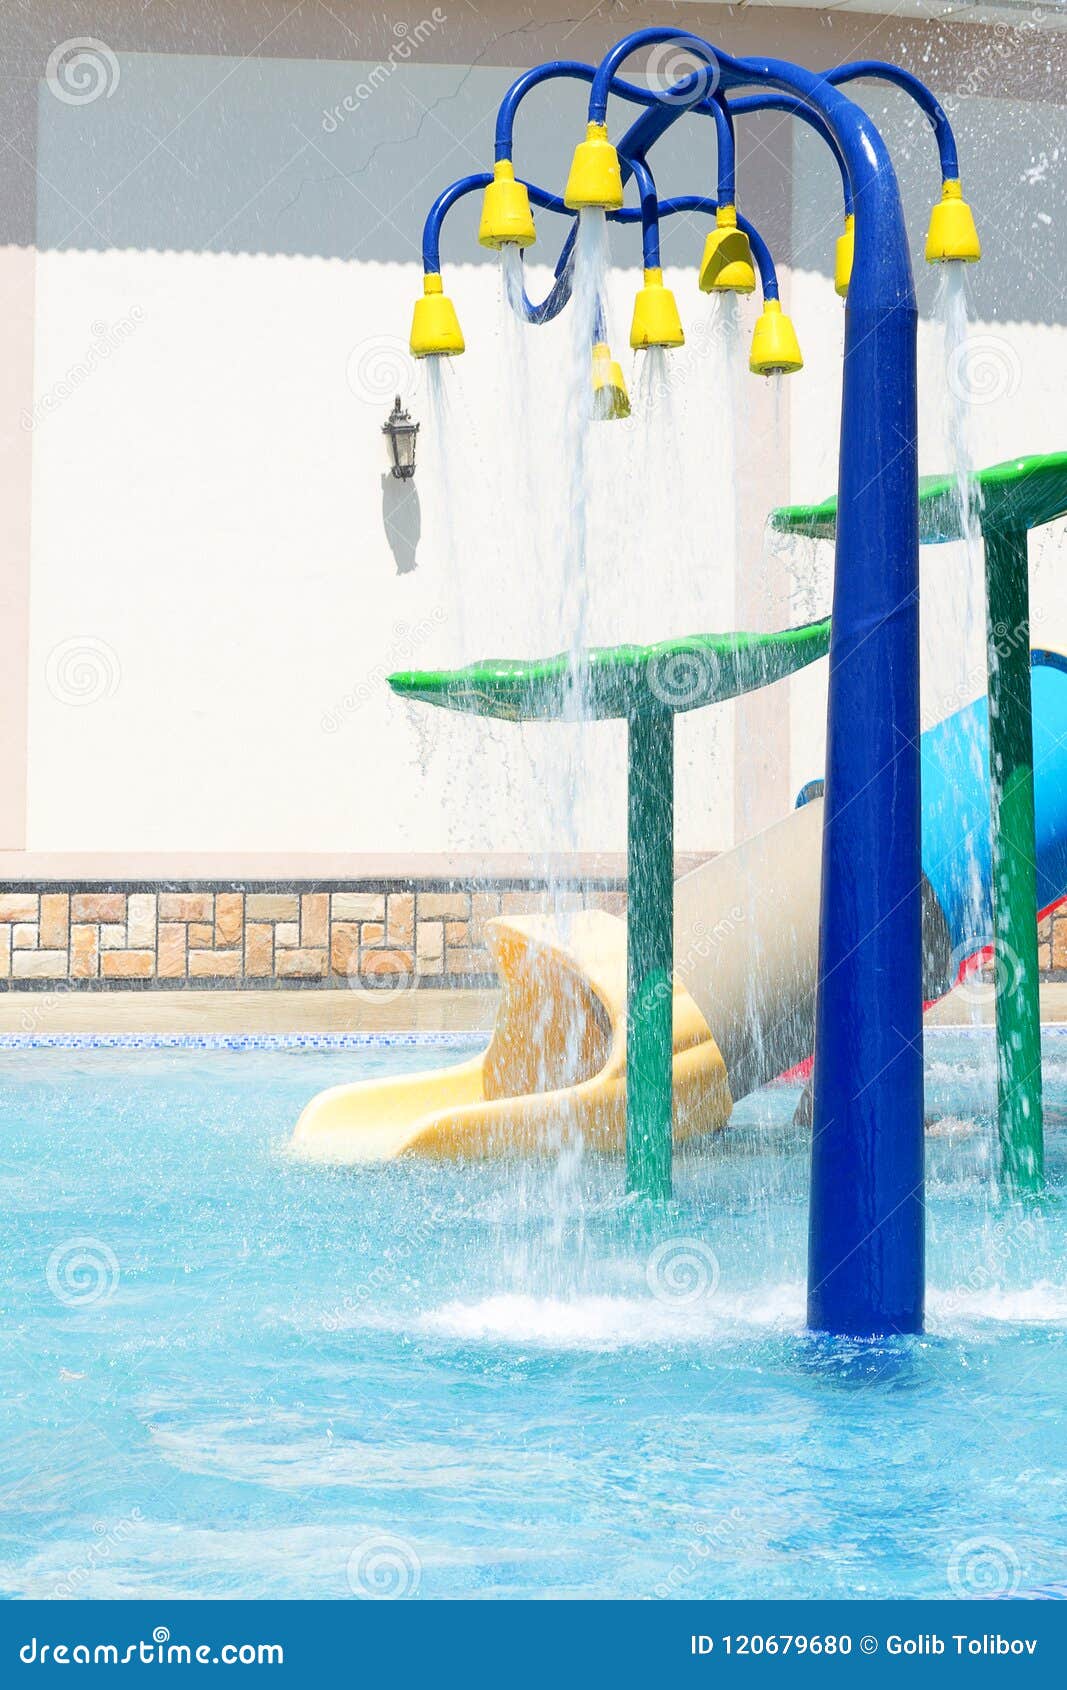 Splash Pad or Sprayground in Pool Water Park for Kids, Children Activity  Background Concept. Stock Photo - Image of children, plunge: 120679680